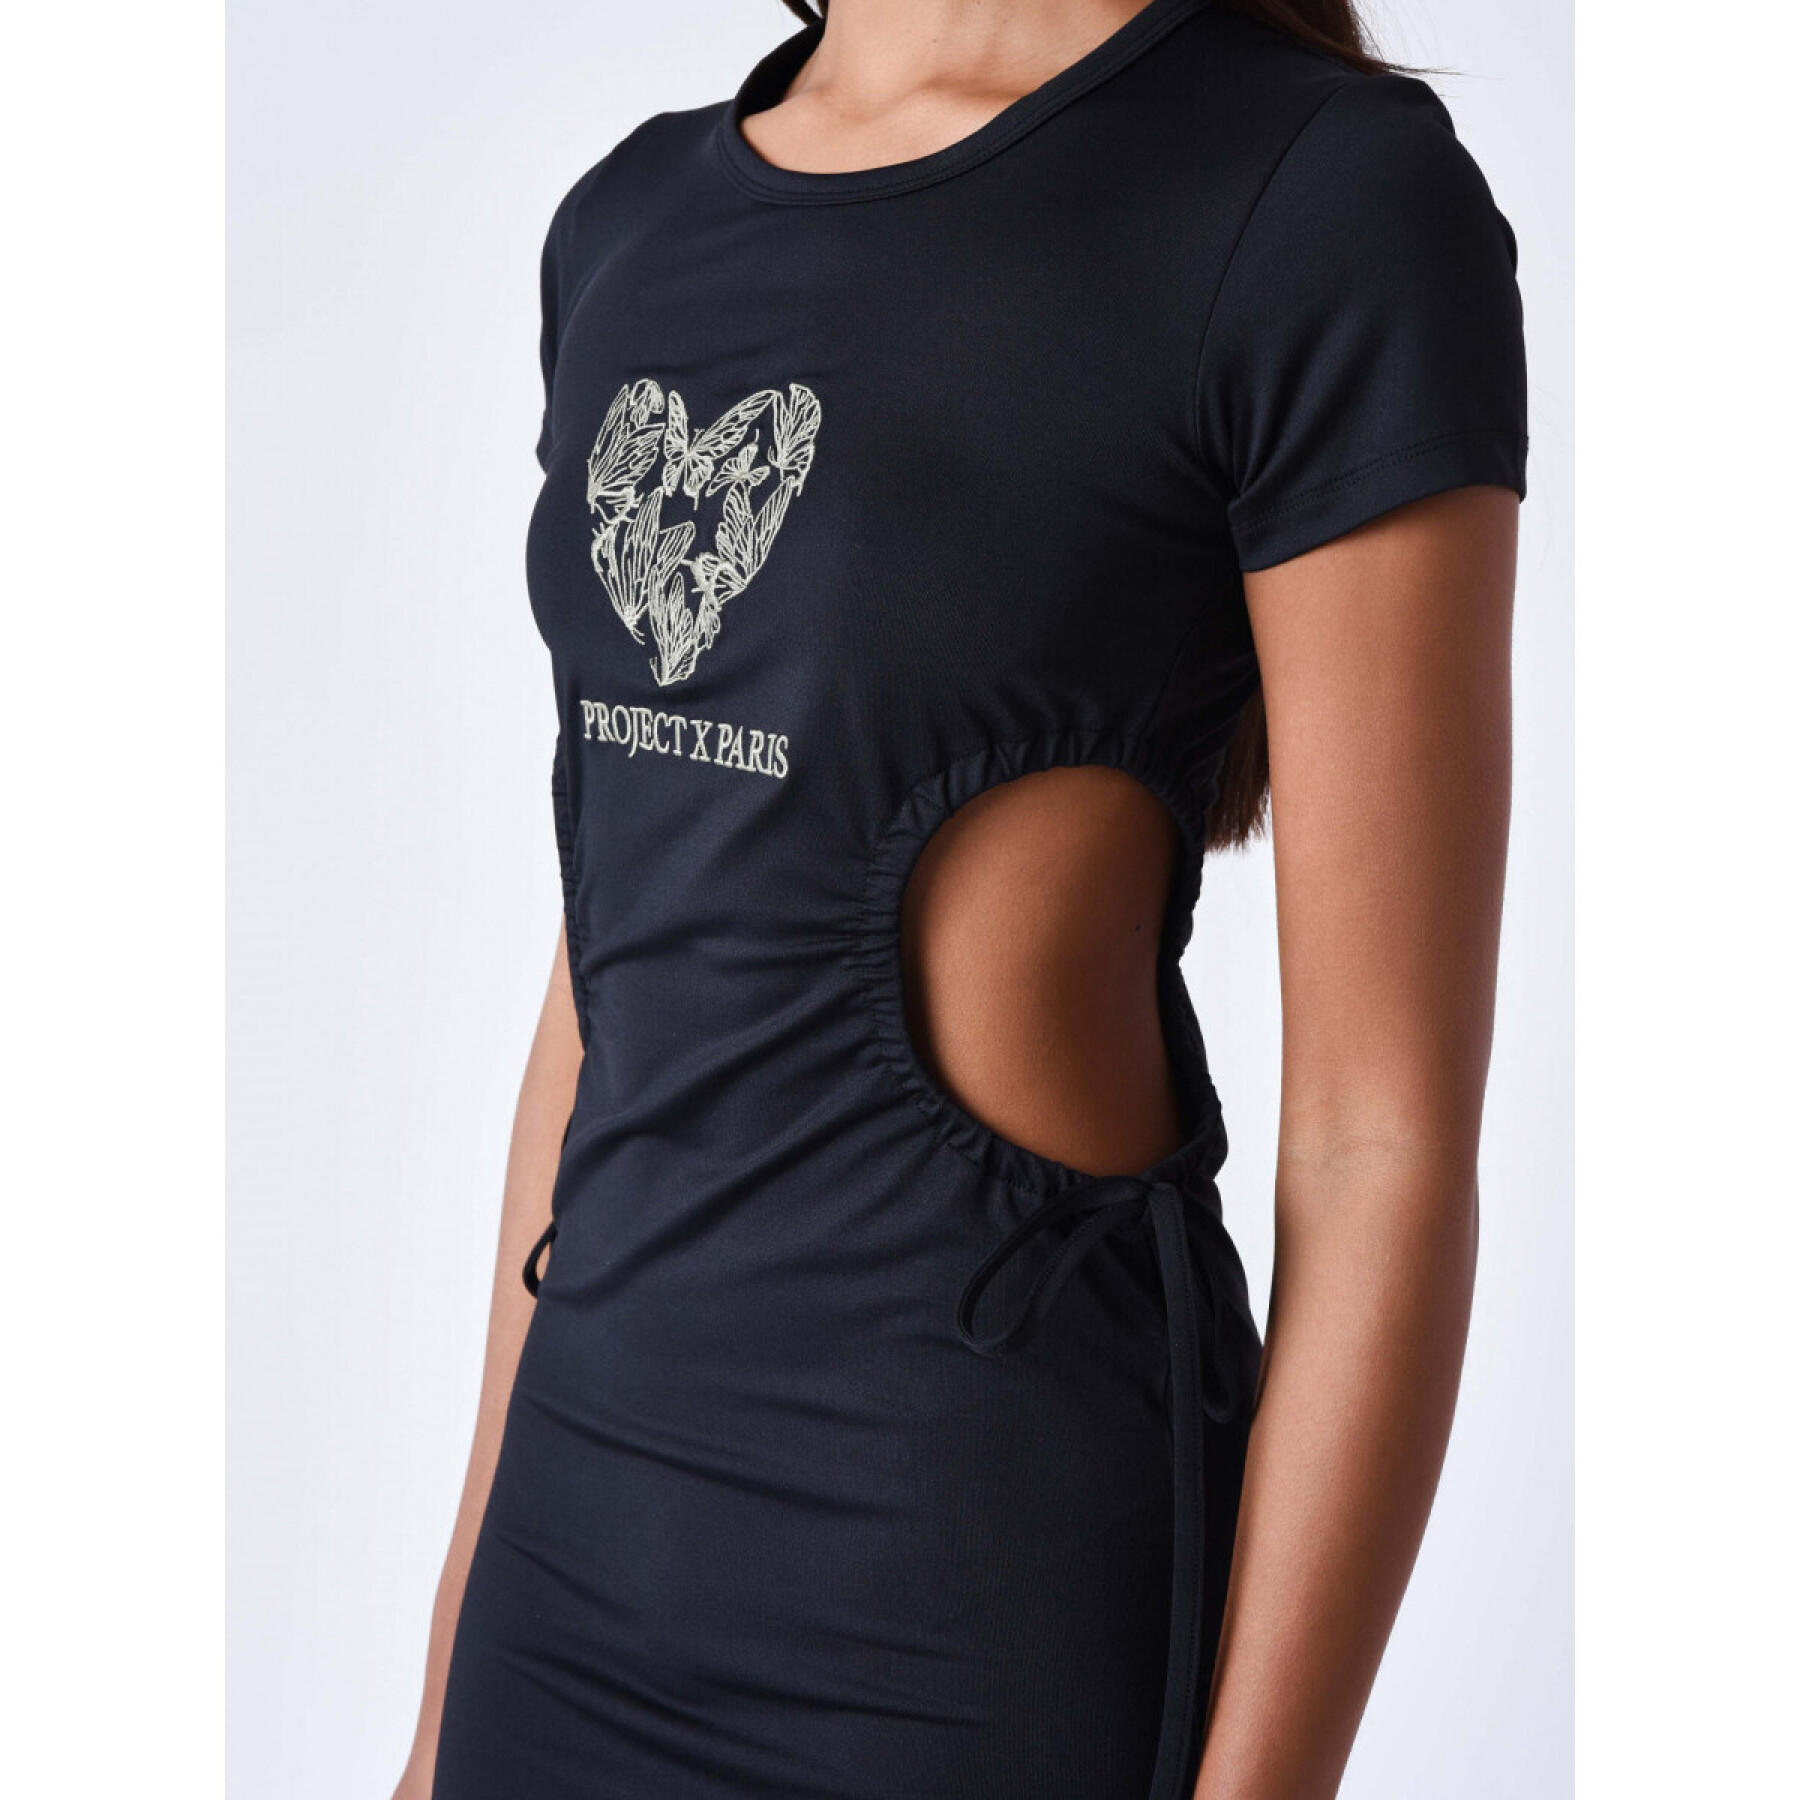 Vestido t-shirt borboleta para mulher Project X Paris